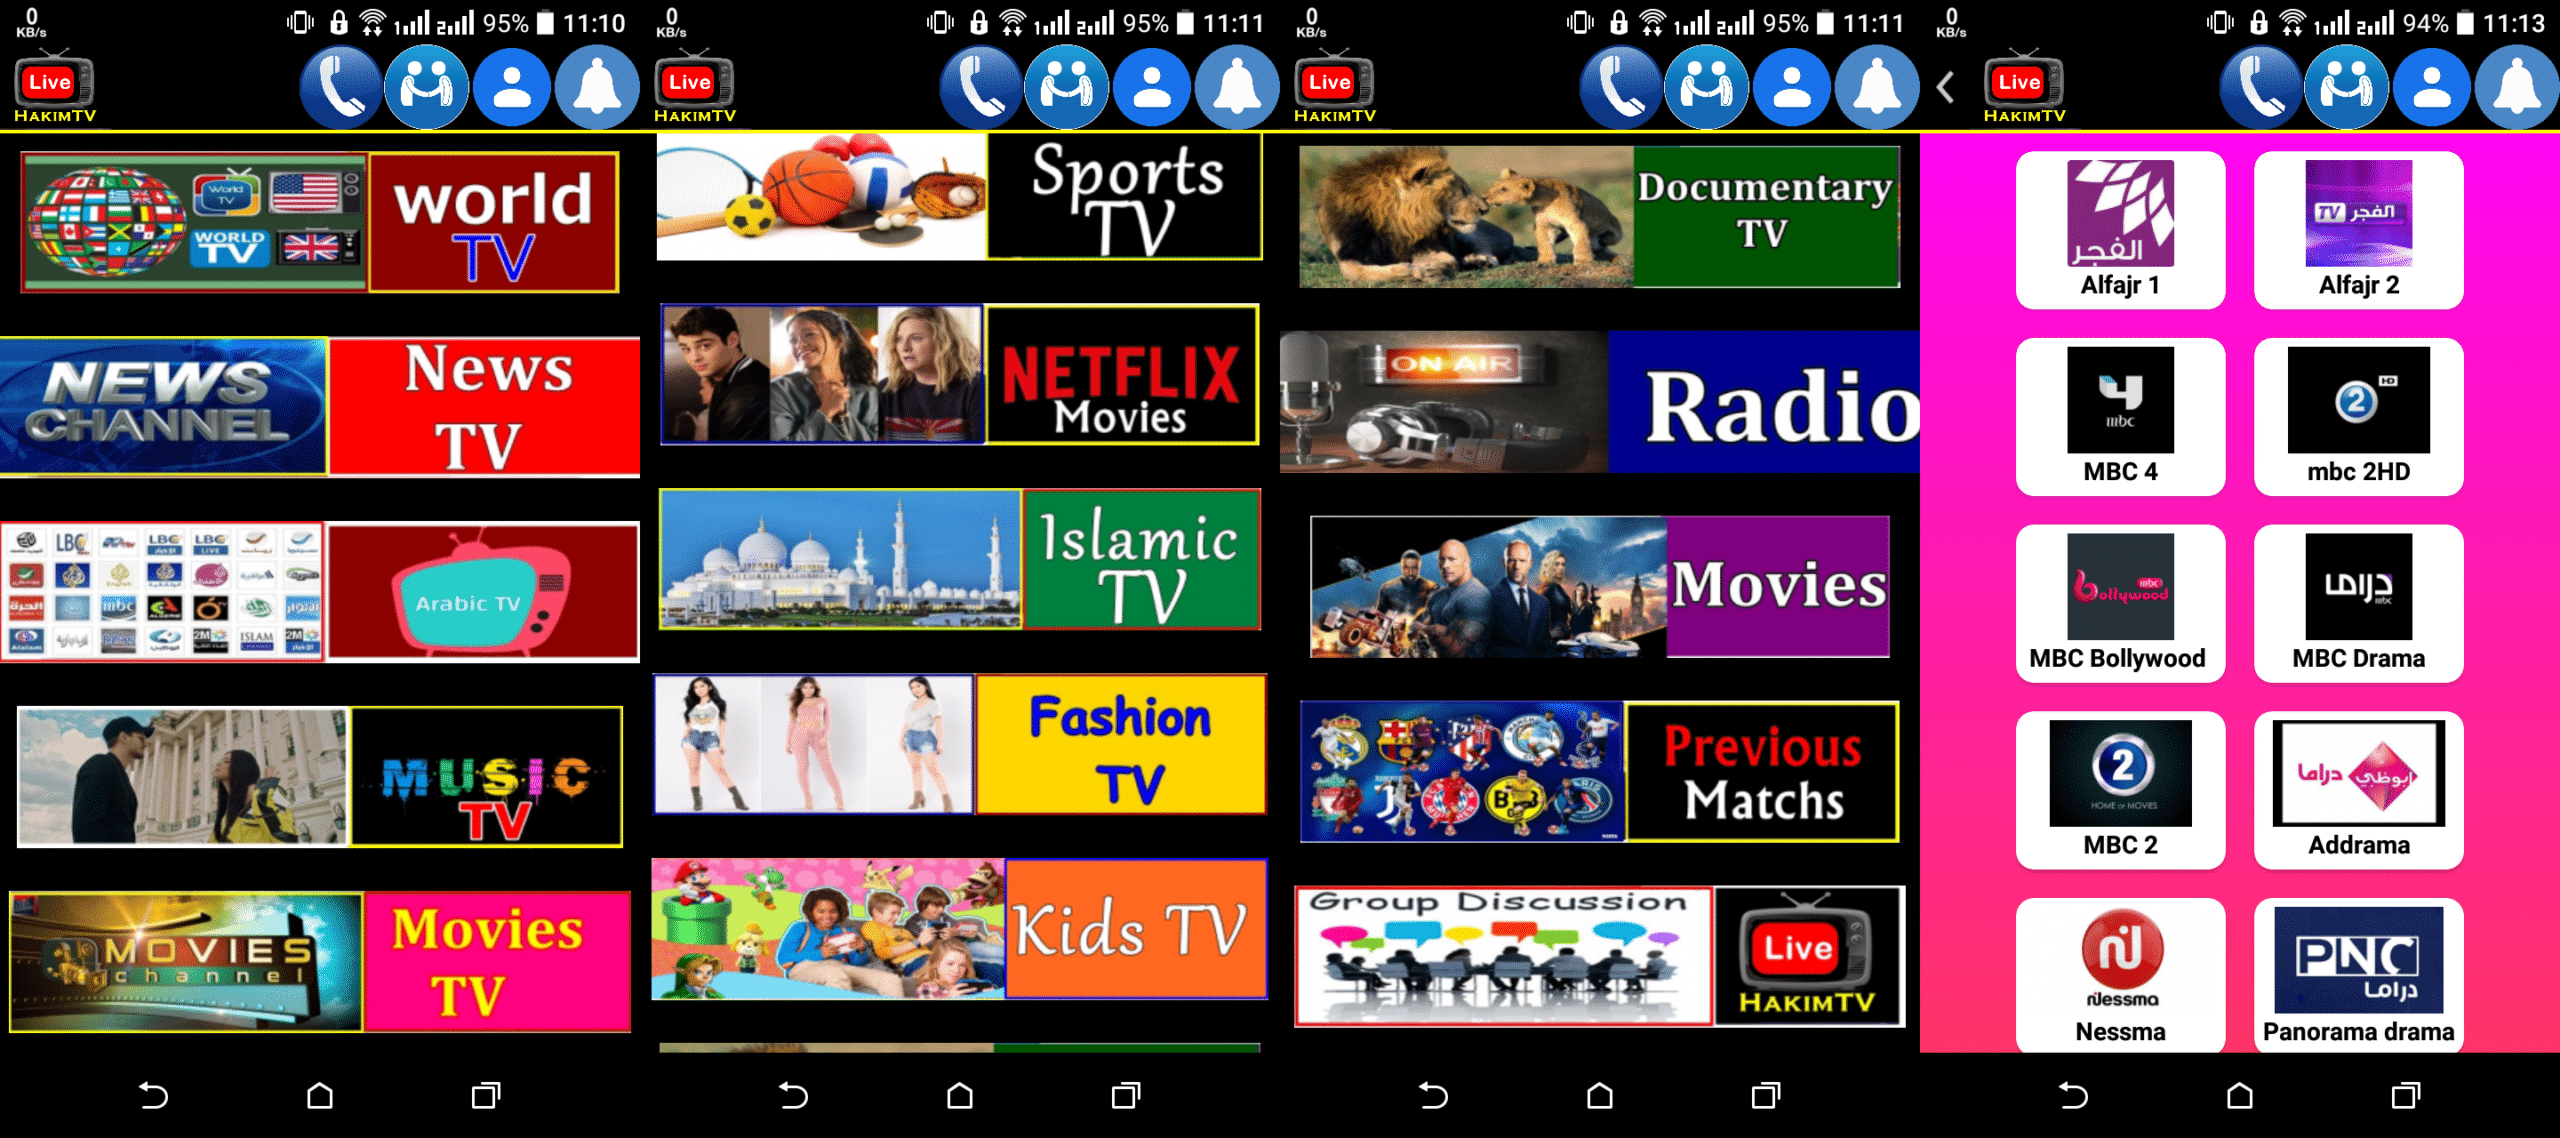 HAKIM TV APK HD Quality LATEST